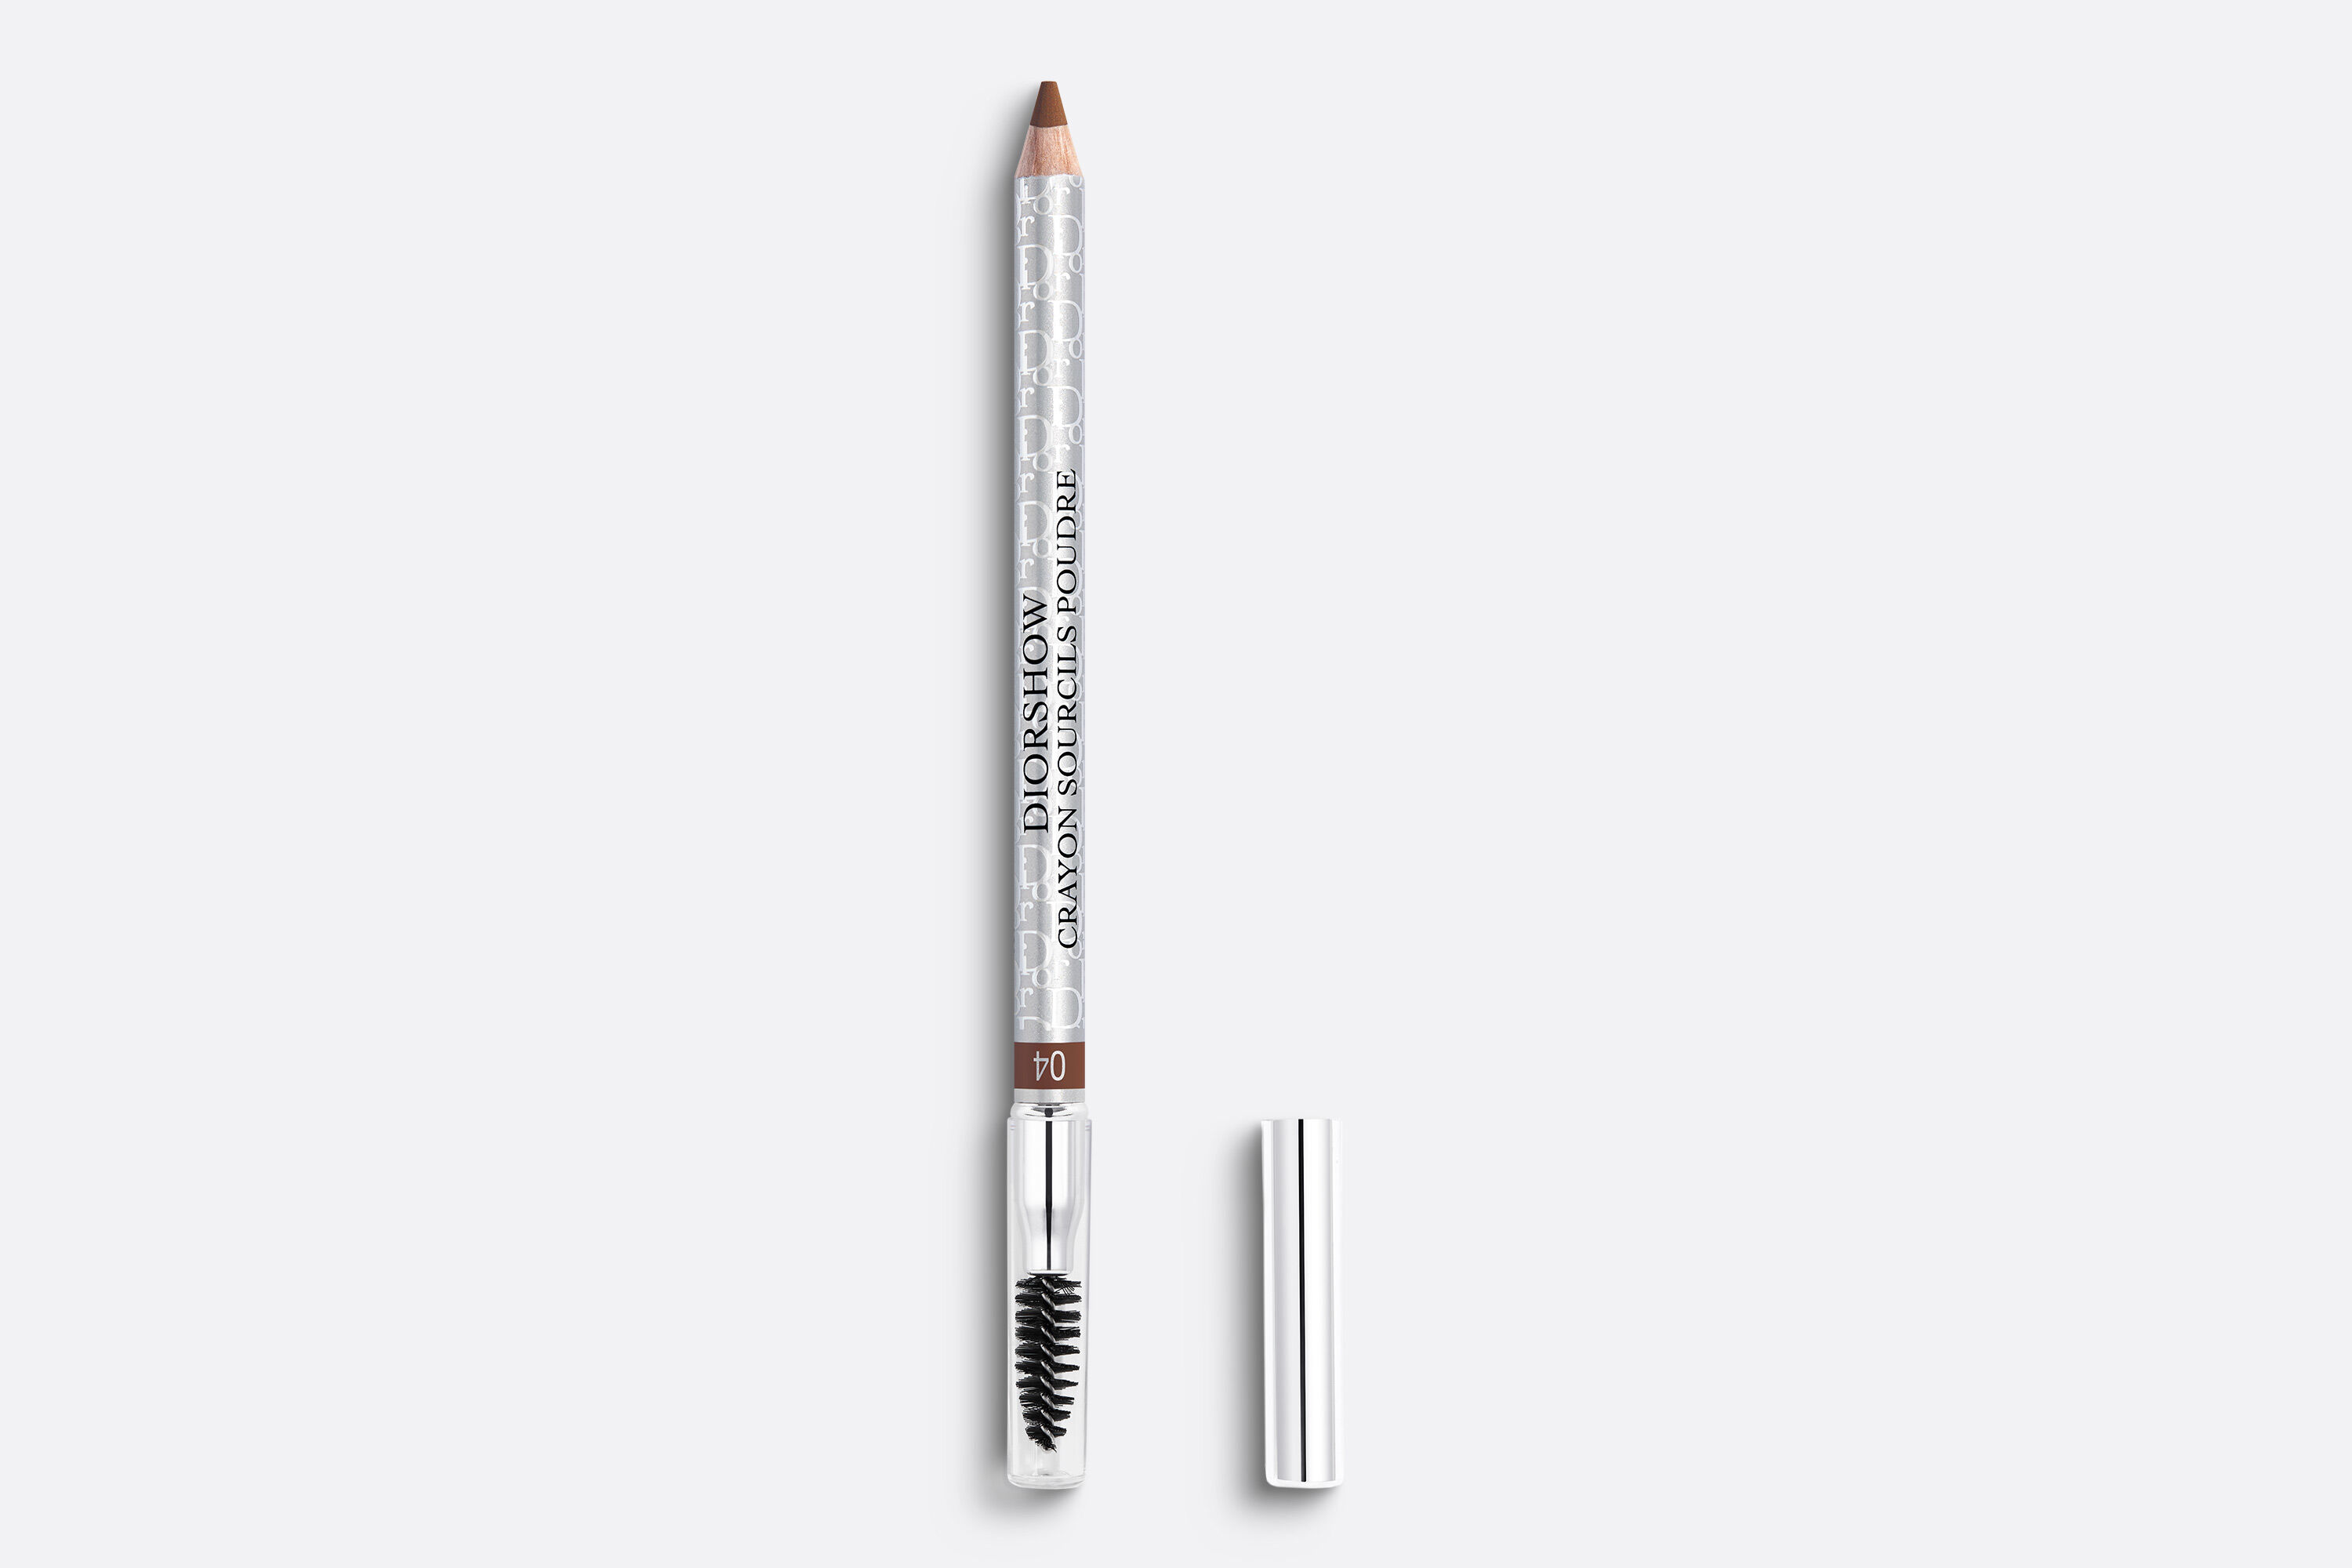 Crayon Sourcils Sculpting Eyebrow Pencil - 60 Noir Cendre by Chanel for  Women - 0.03 oz Eyebrow Pencil